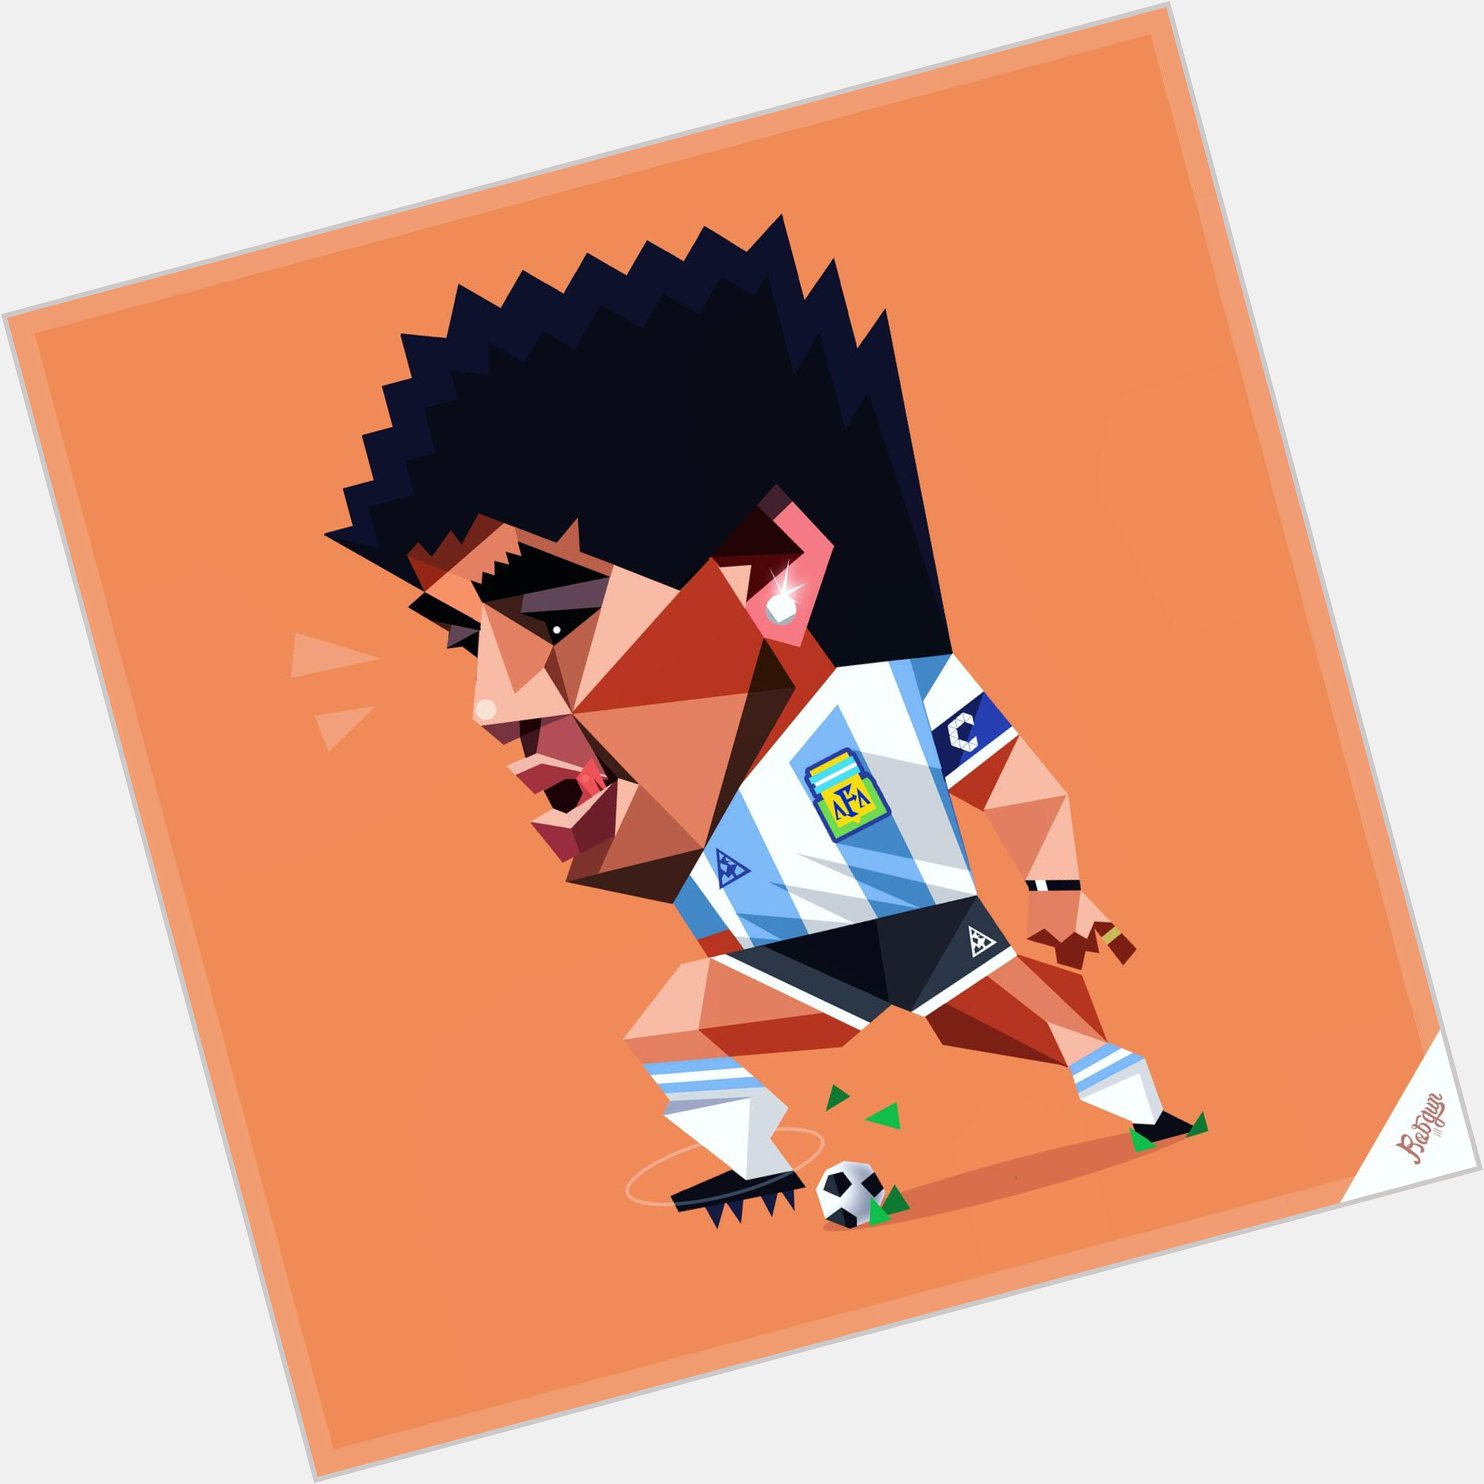 Happy birthday Diego Maradona. 